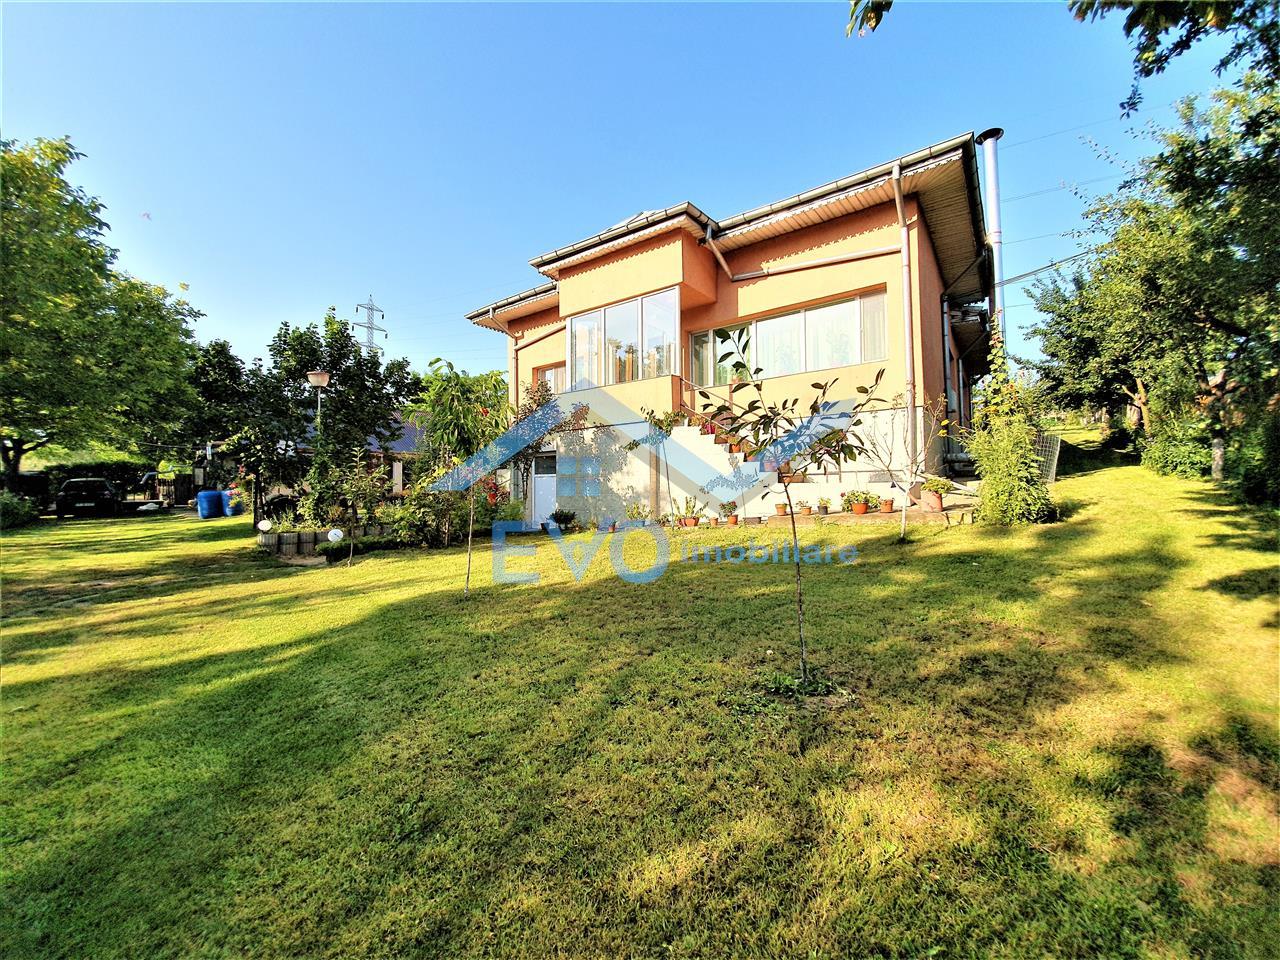 Vanzare Casa individuala + una de oaspeti, 3146 mp teren, zona Carlig